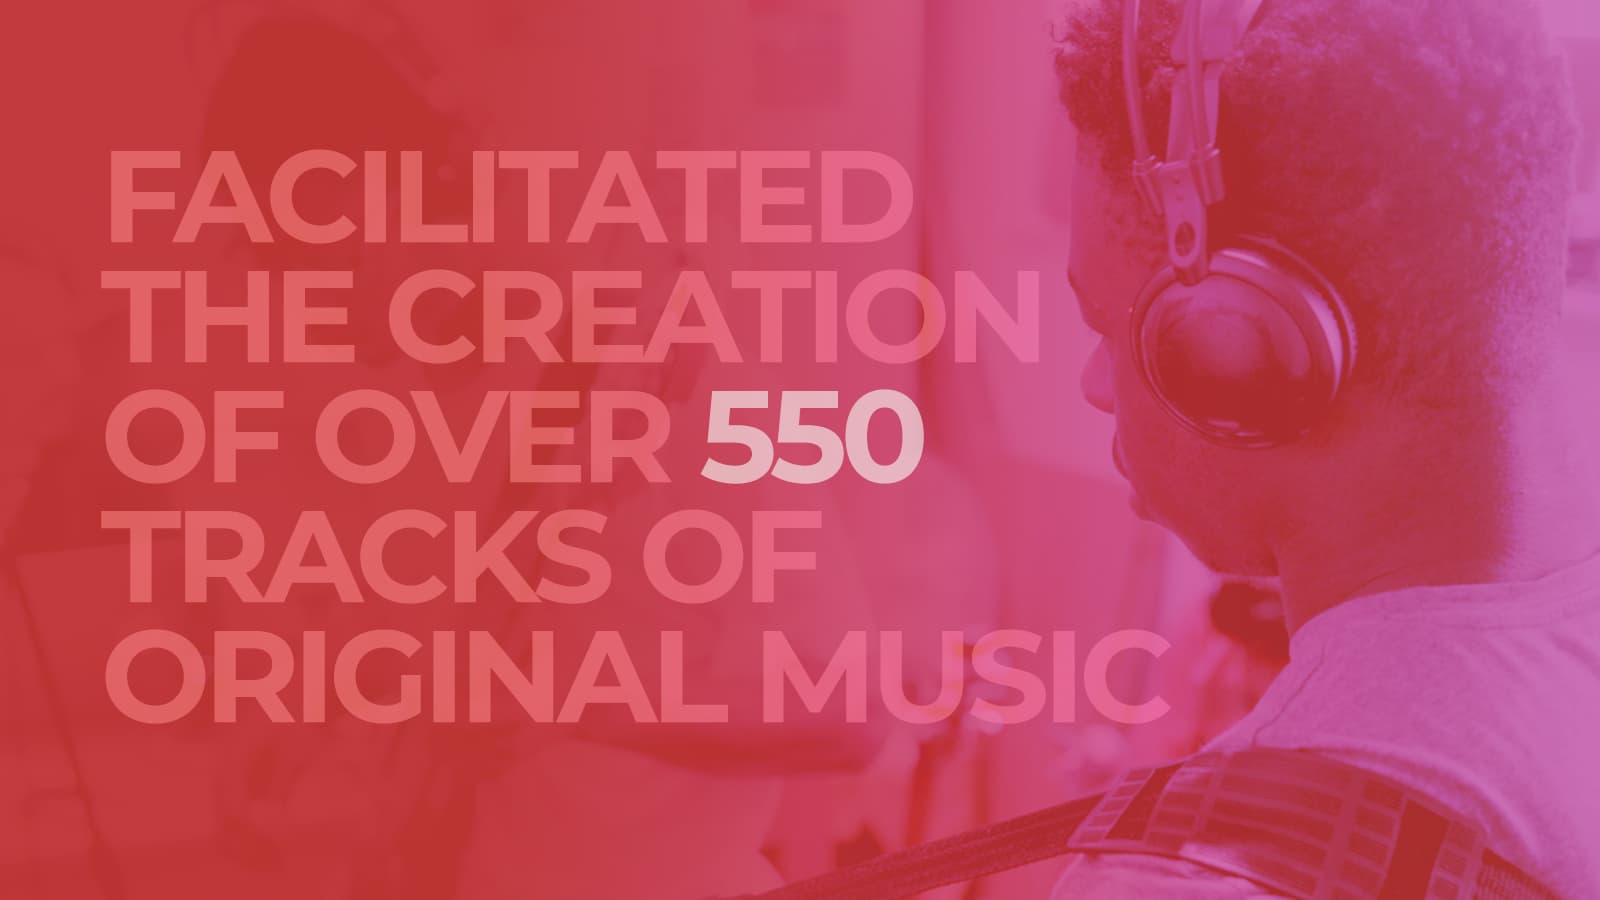 Facilitated the creation of over 550 Tracks of original music.